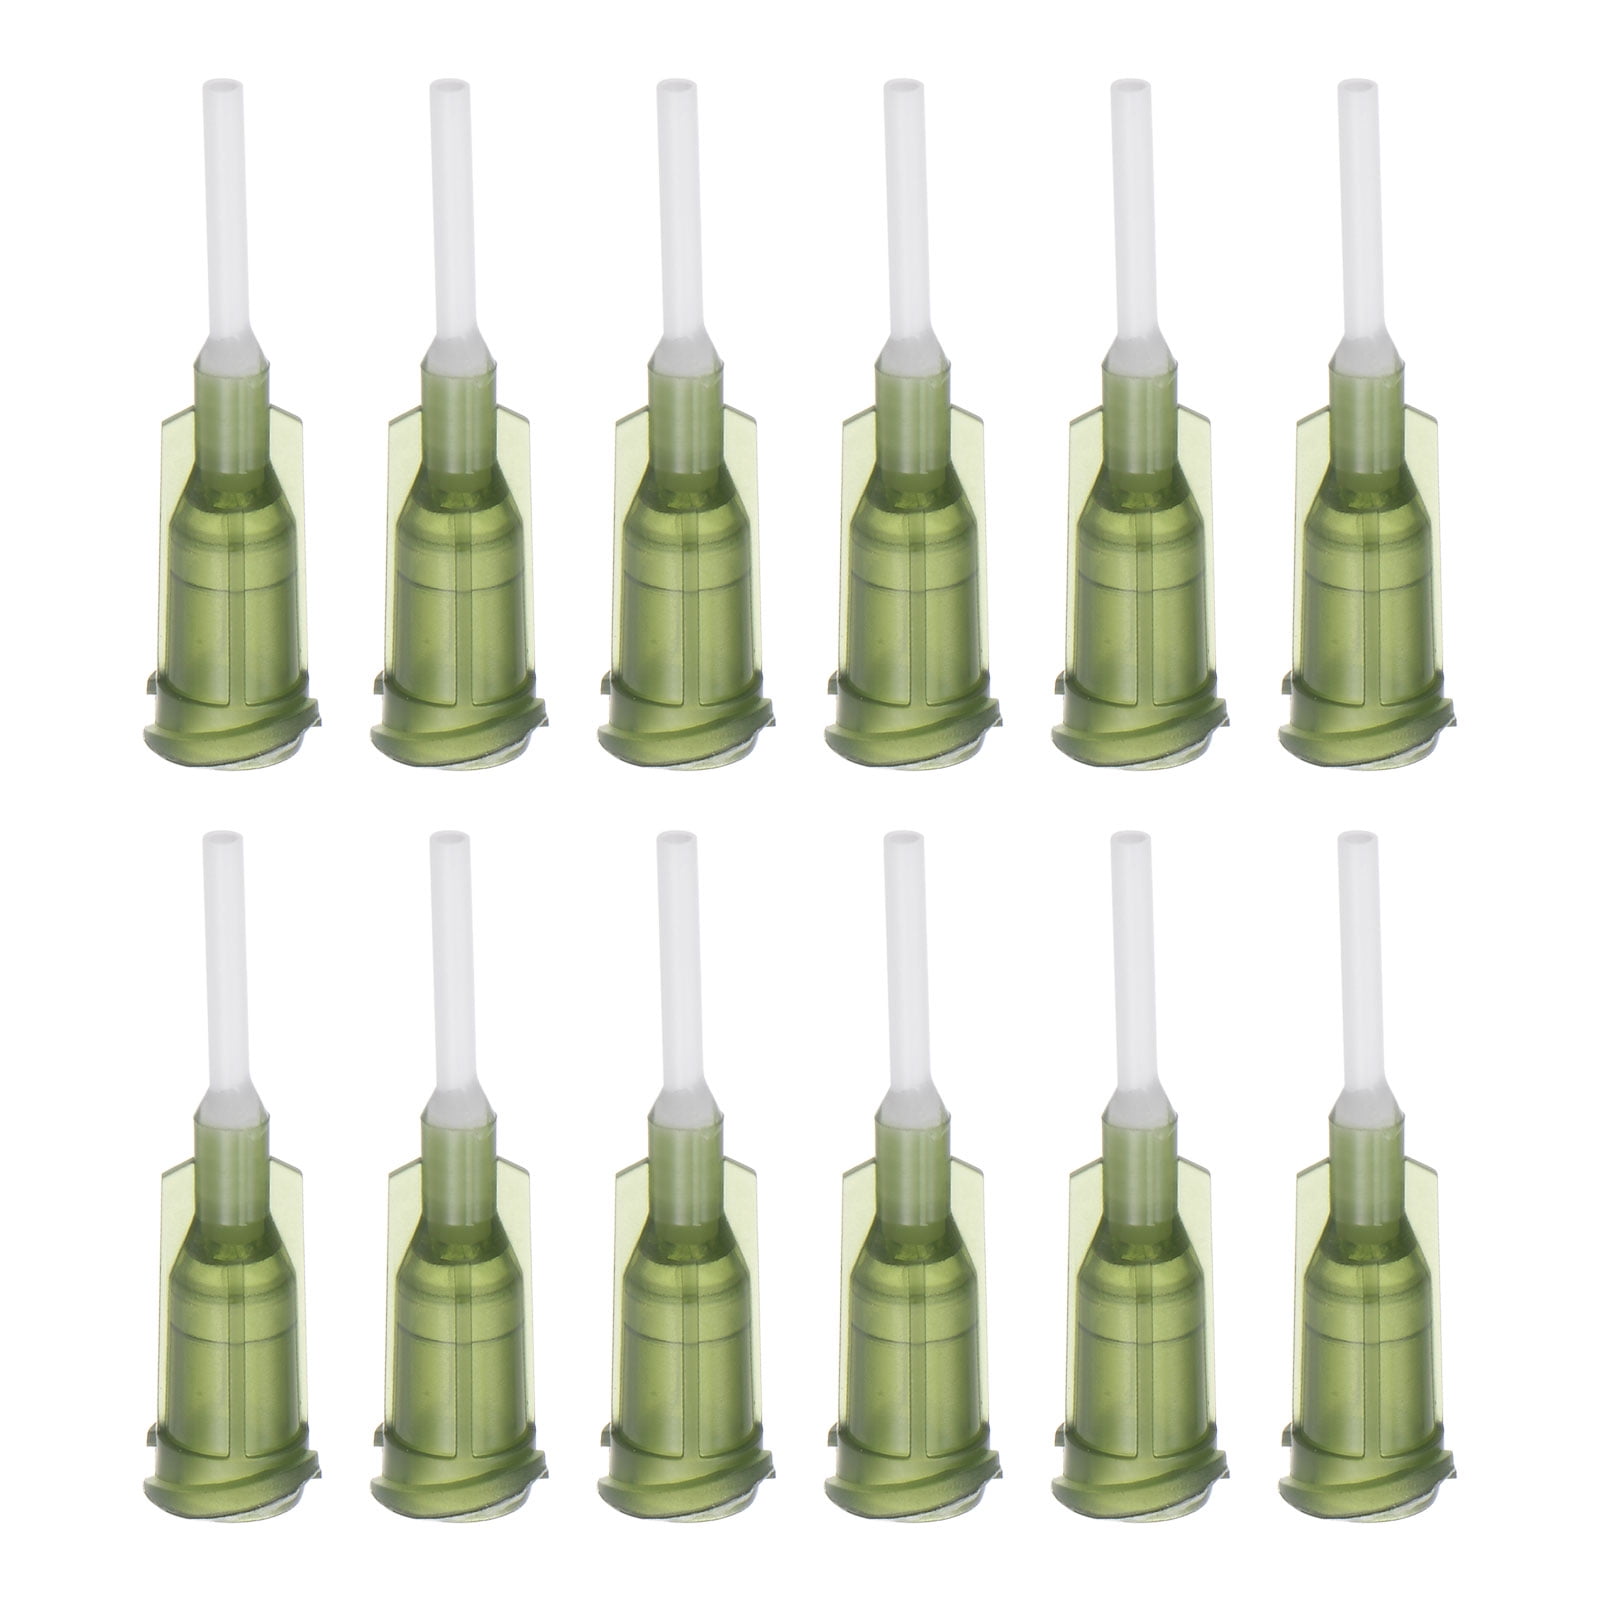 Wholesale Pack Of 1000 Glue Syringe Dispensing Tips 14G To 25G PP Flexible  Needle Needls, 25mm Tube Length 1 Inch From Tradingwholesale, $48.25